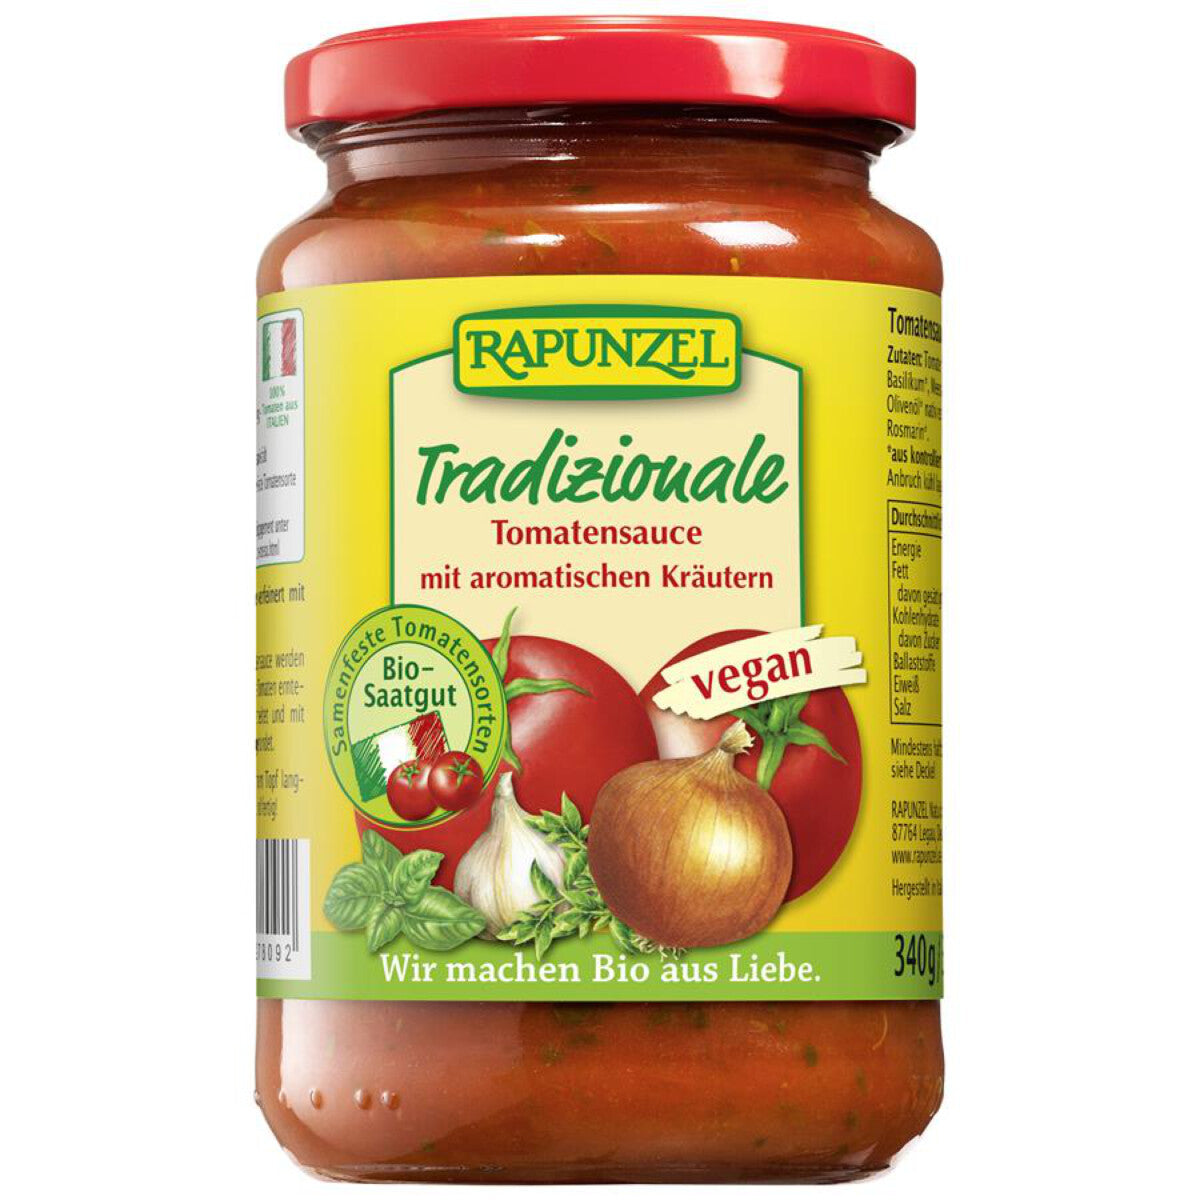 RAPUNZEL Tomatensauce Tradizionale - 340 g